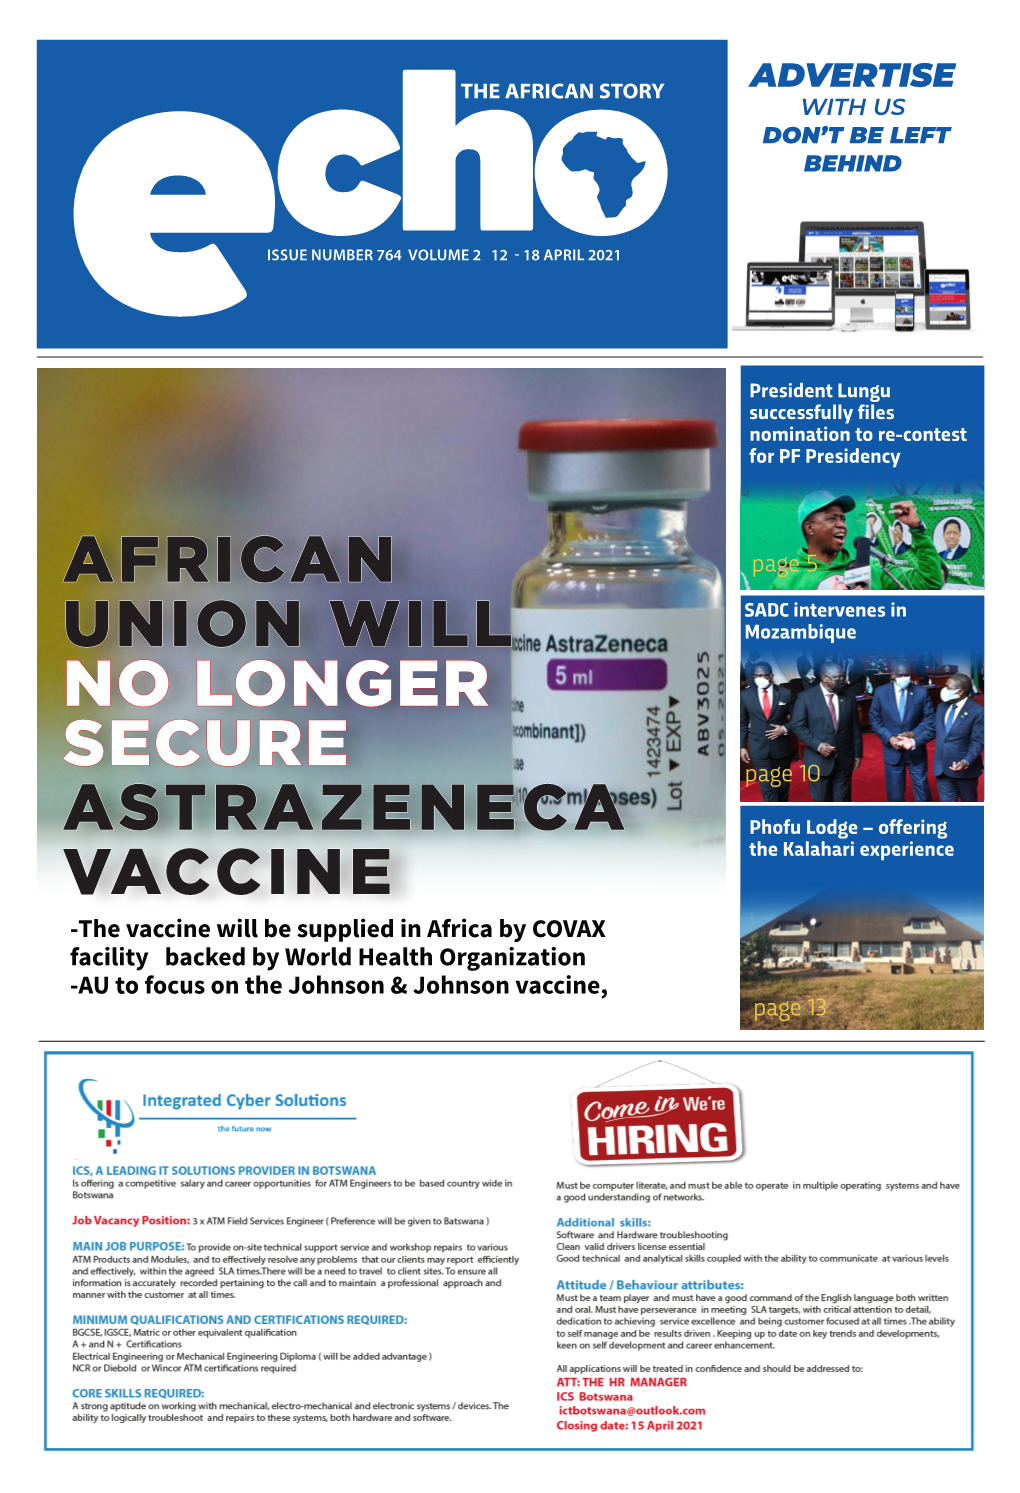 African Union Will No Longer Secure Astrazeneca Vaccine